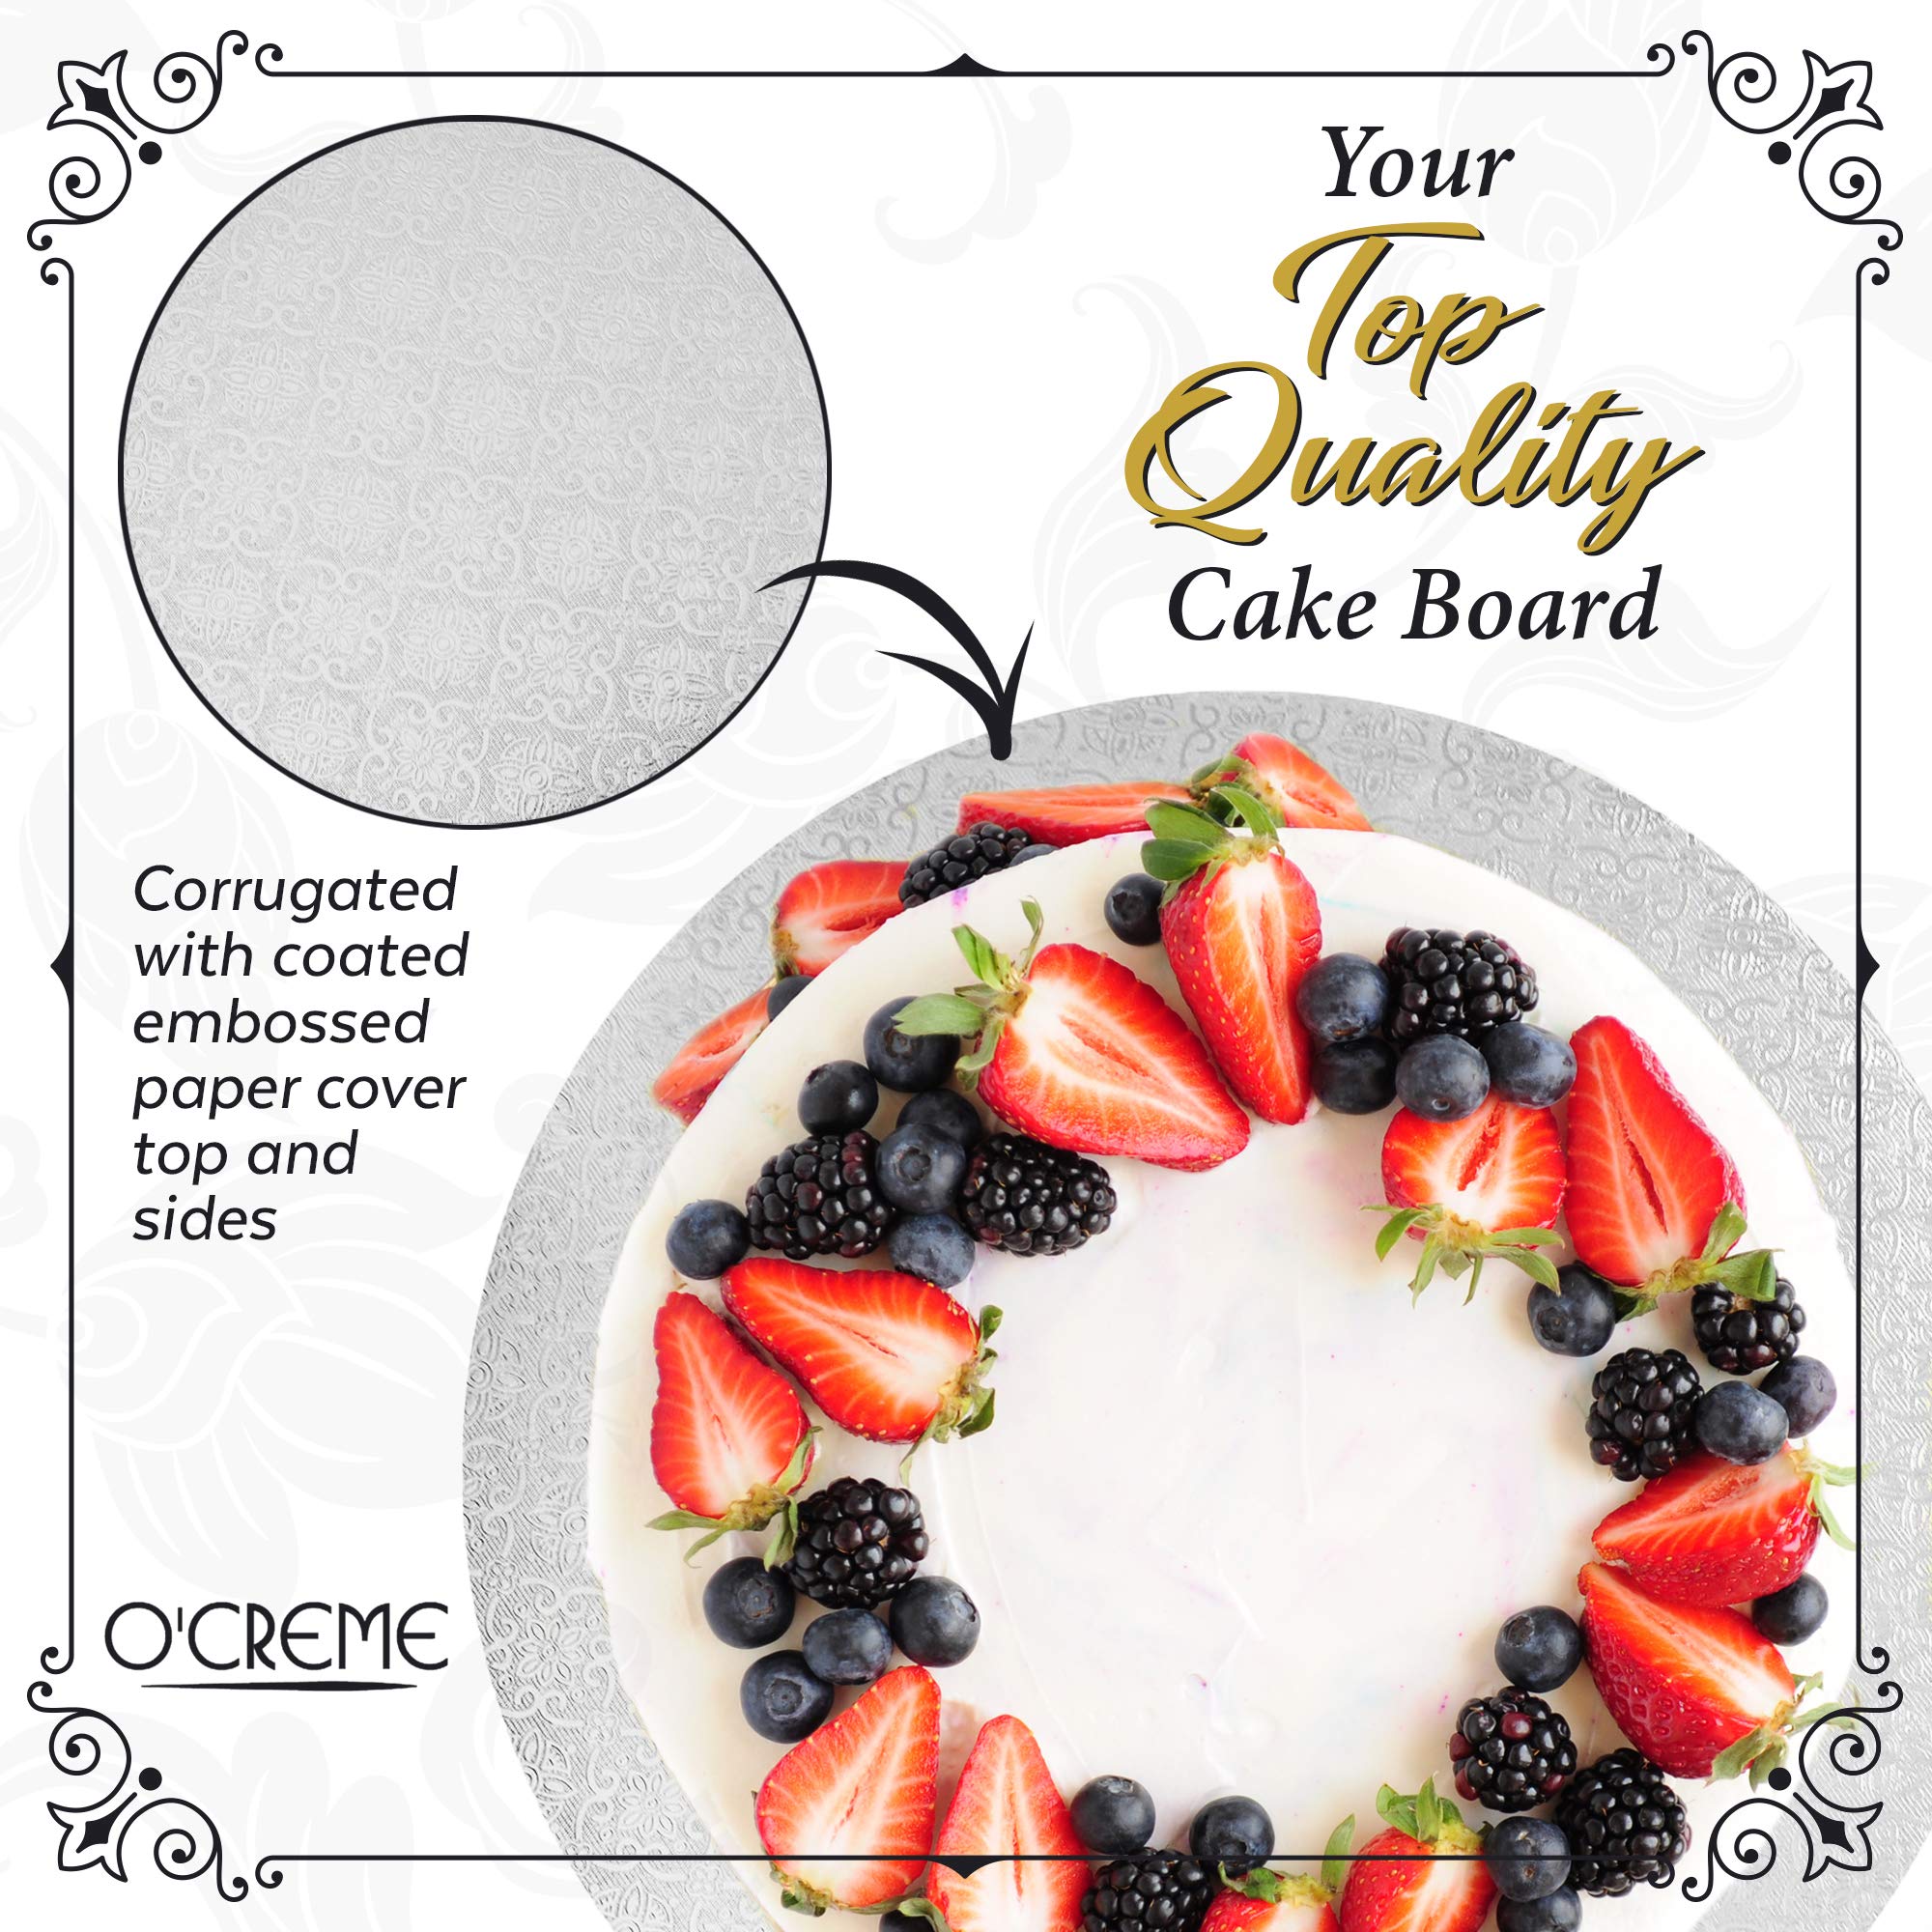 O'CREME White Wraparound Cake Pastry Round Drum Board 1/4 Inch Thick, 12 Inch Diameter - Pack of 10